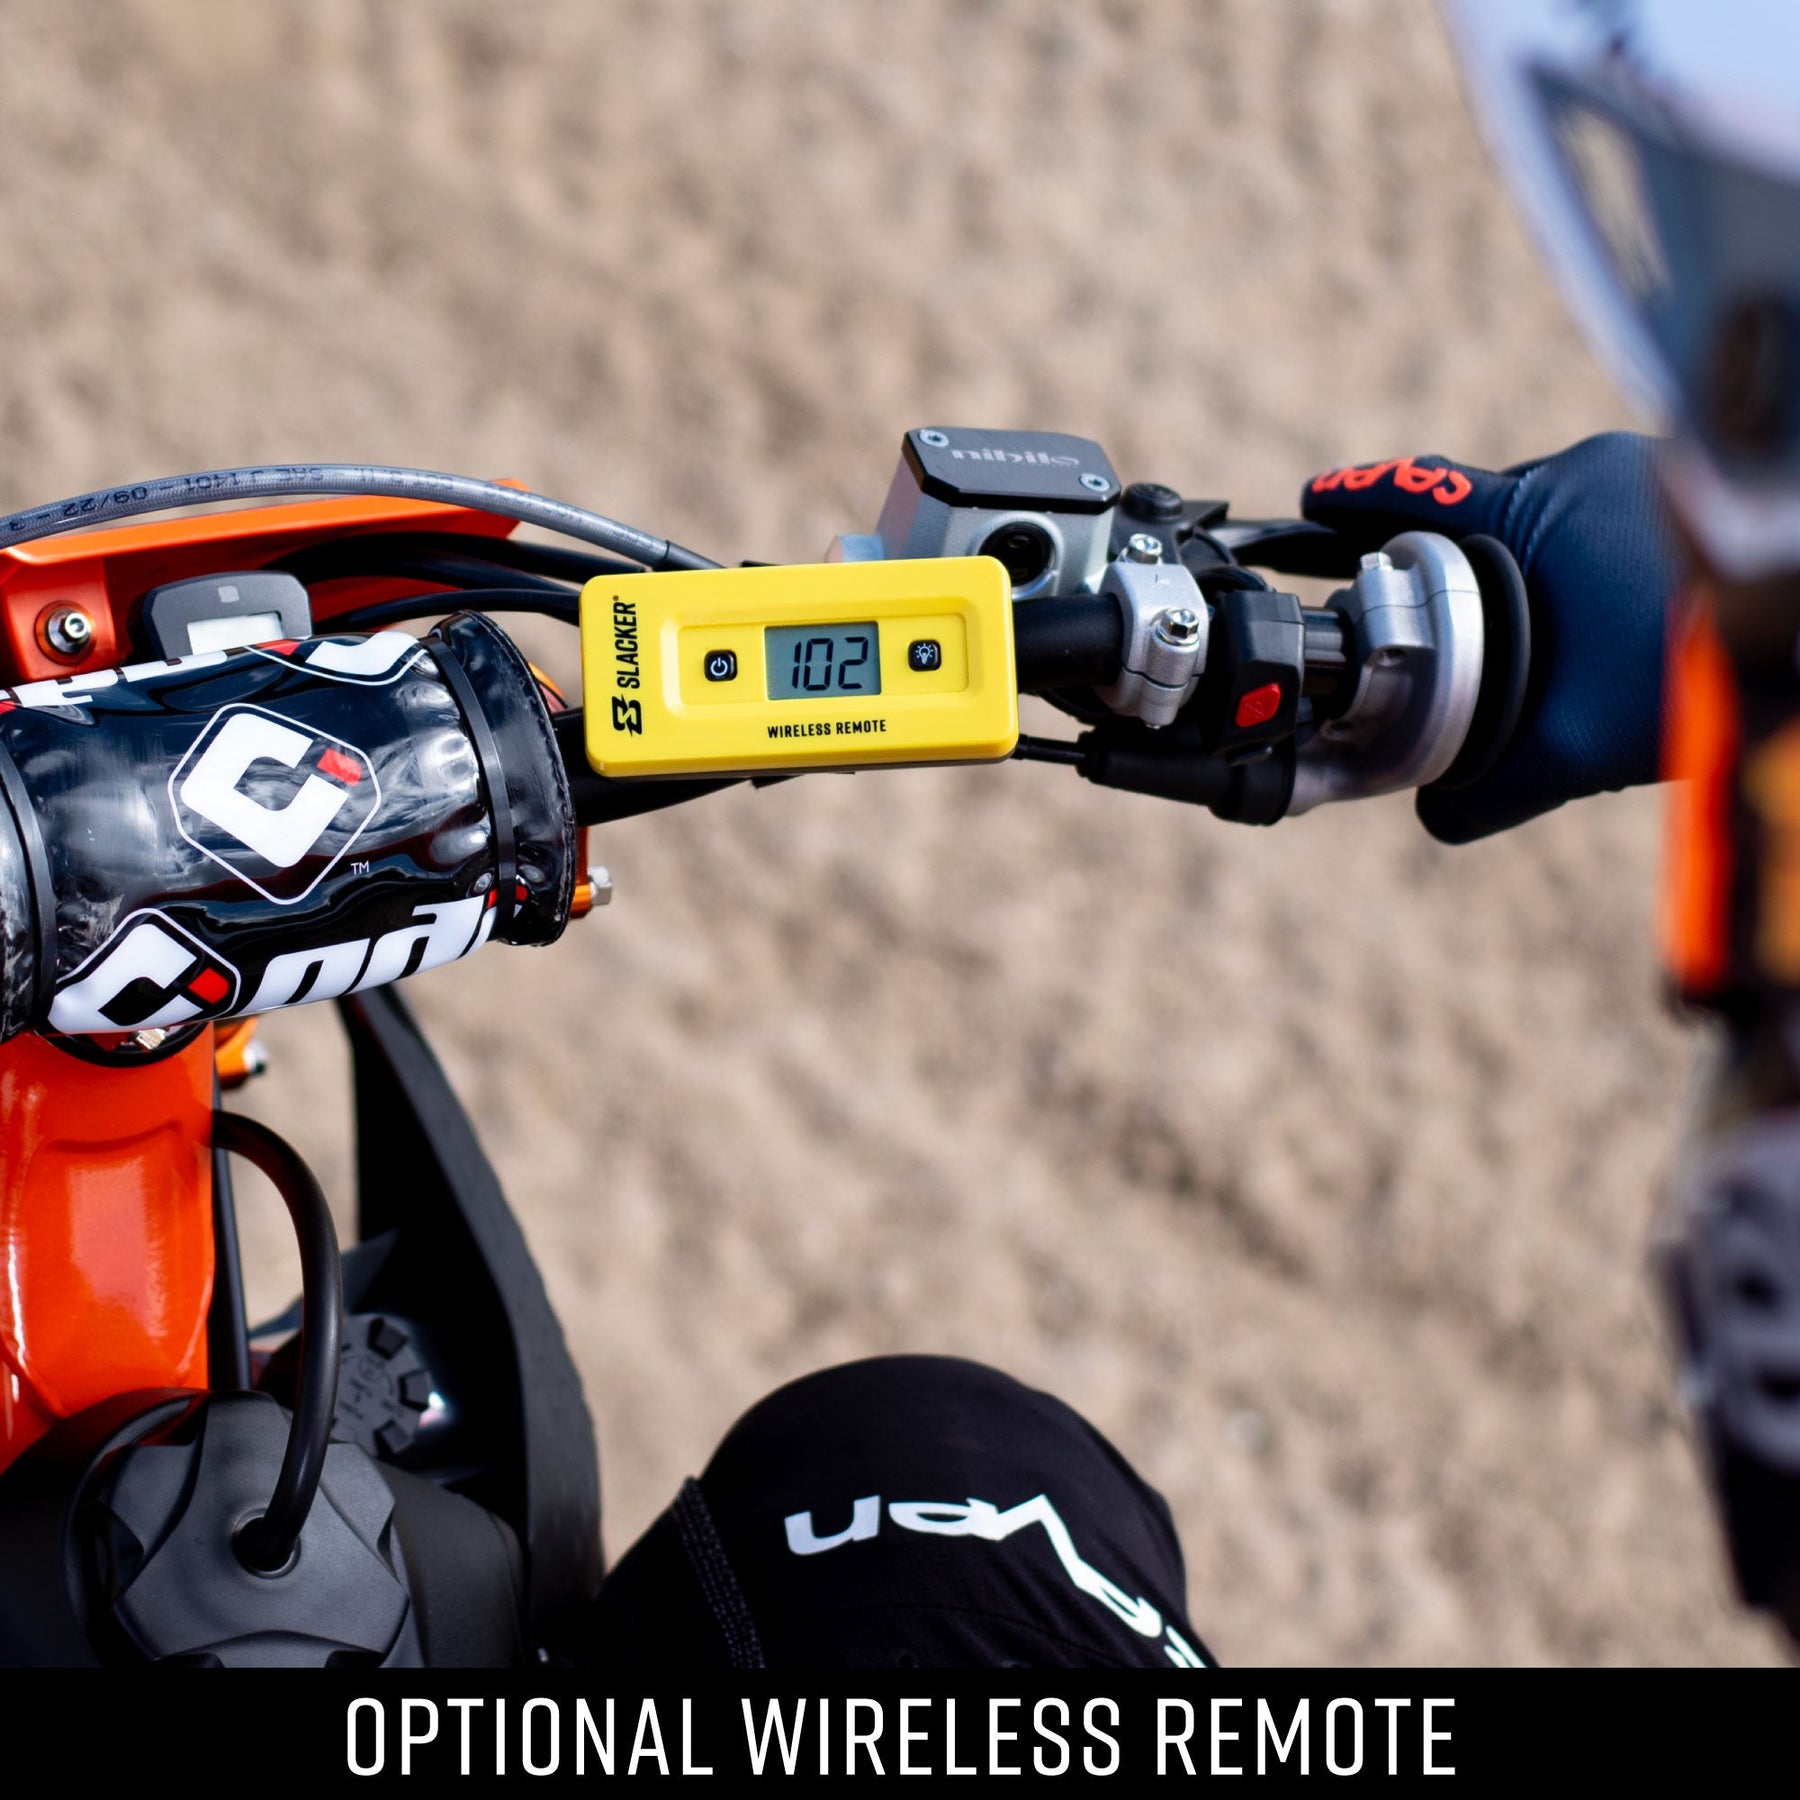 The Slacker digital suspension tuner optional wireless remote.